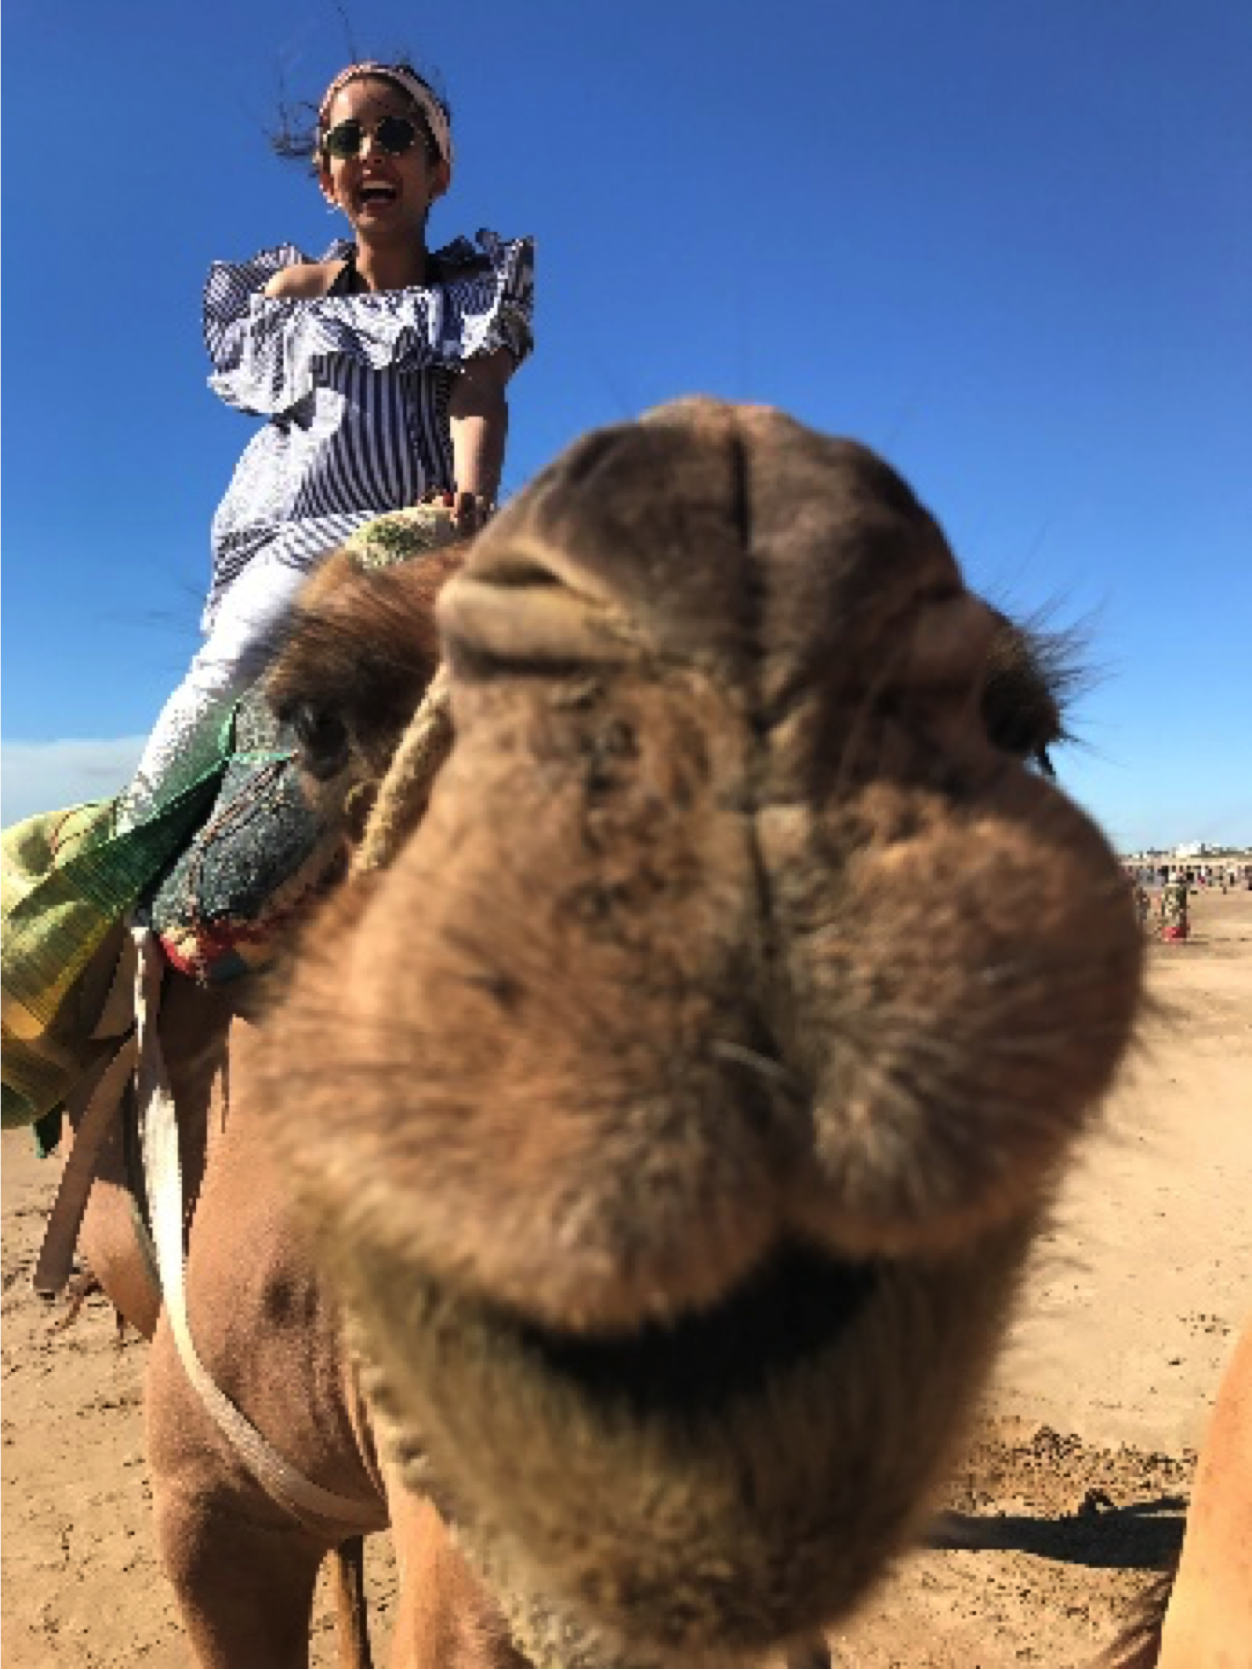 Ms. Uddin riding a camel